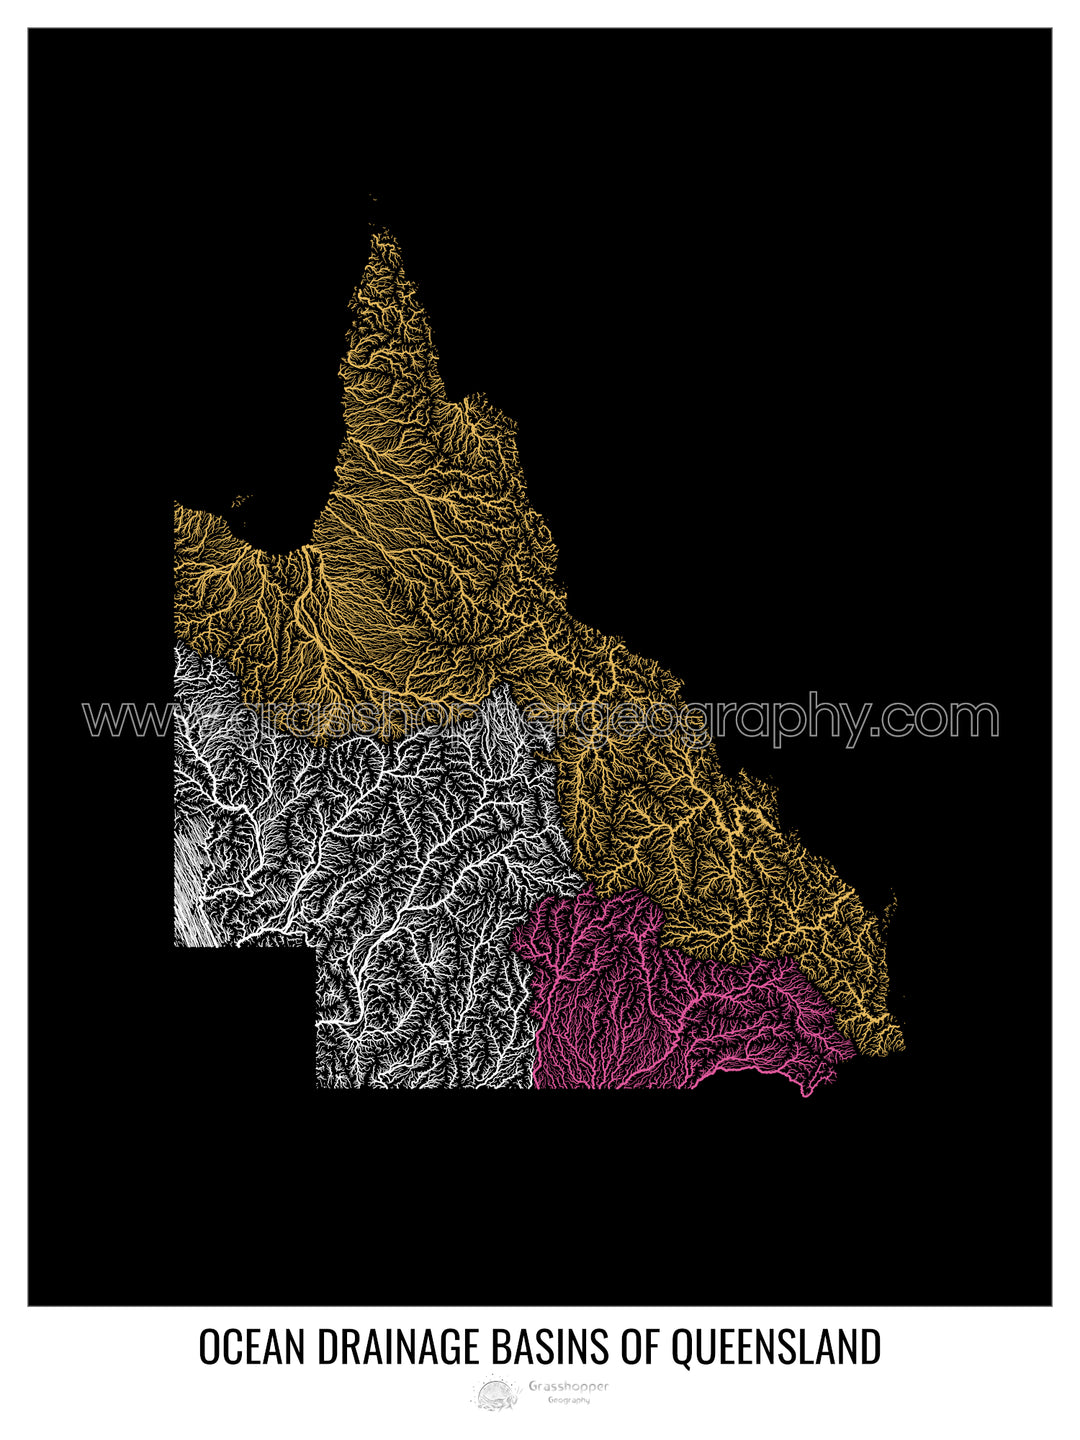 Queensland - Carte du bassin versant océanique, noir v1 - Tirage photo artistique